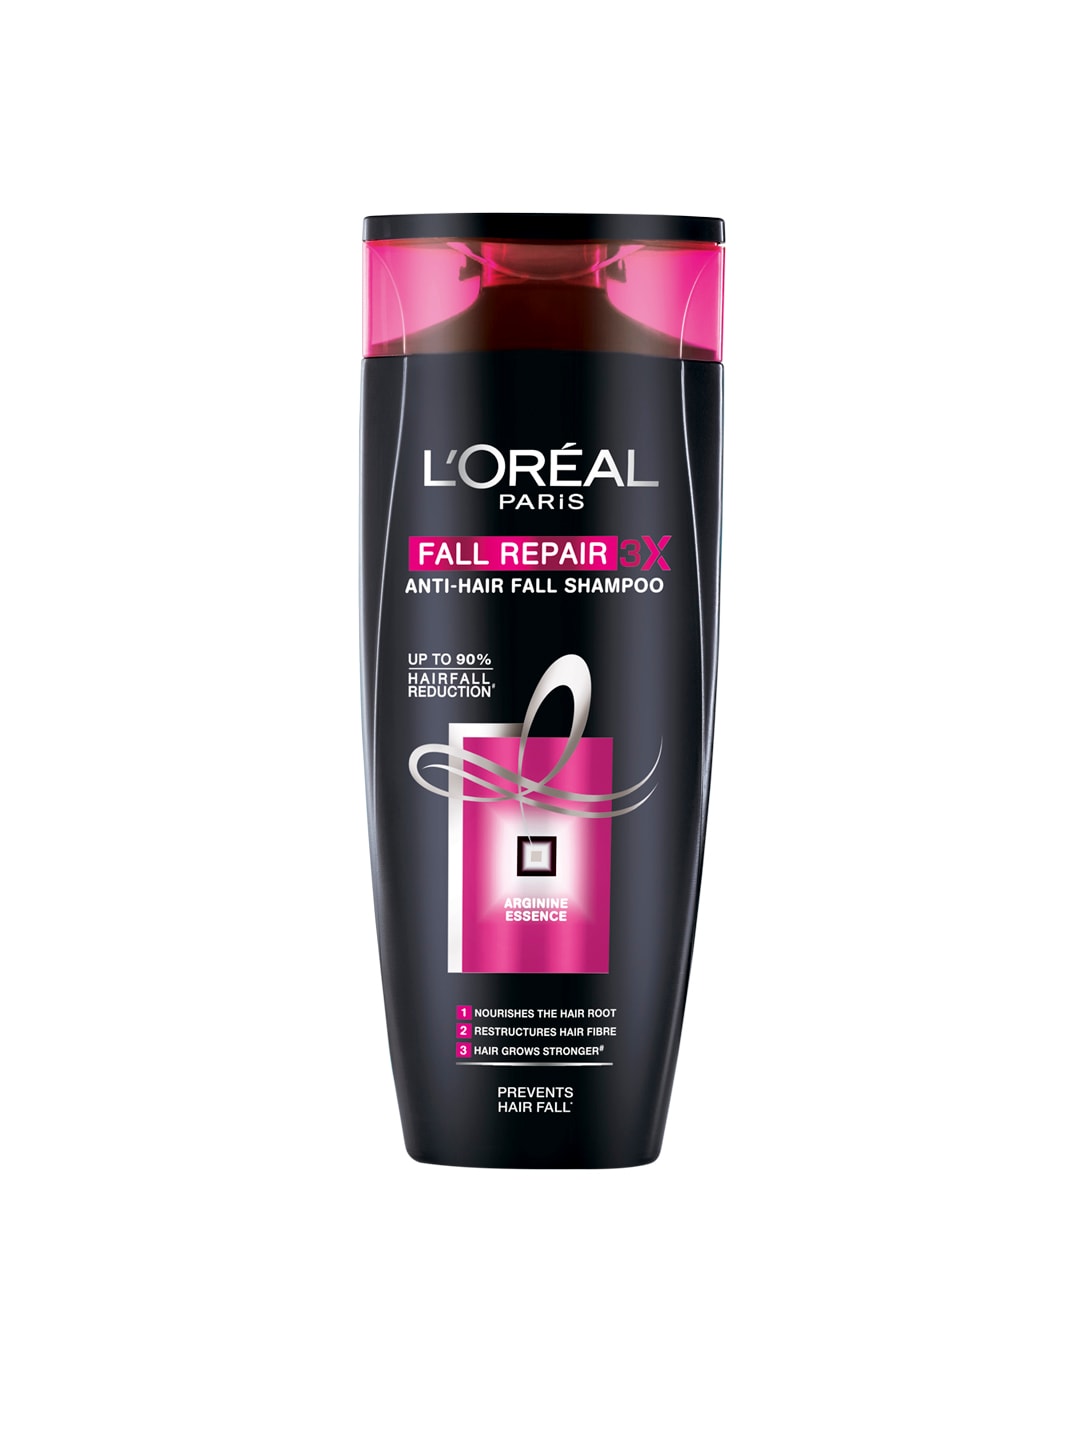 L'Oreal Paris Fall Resist 3X Anti-Hair Fall Shampoo 360 ml Price in India